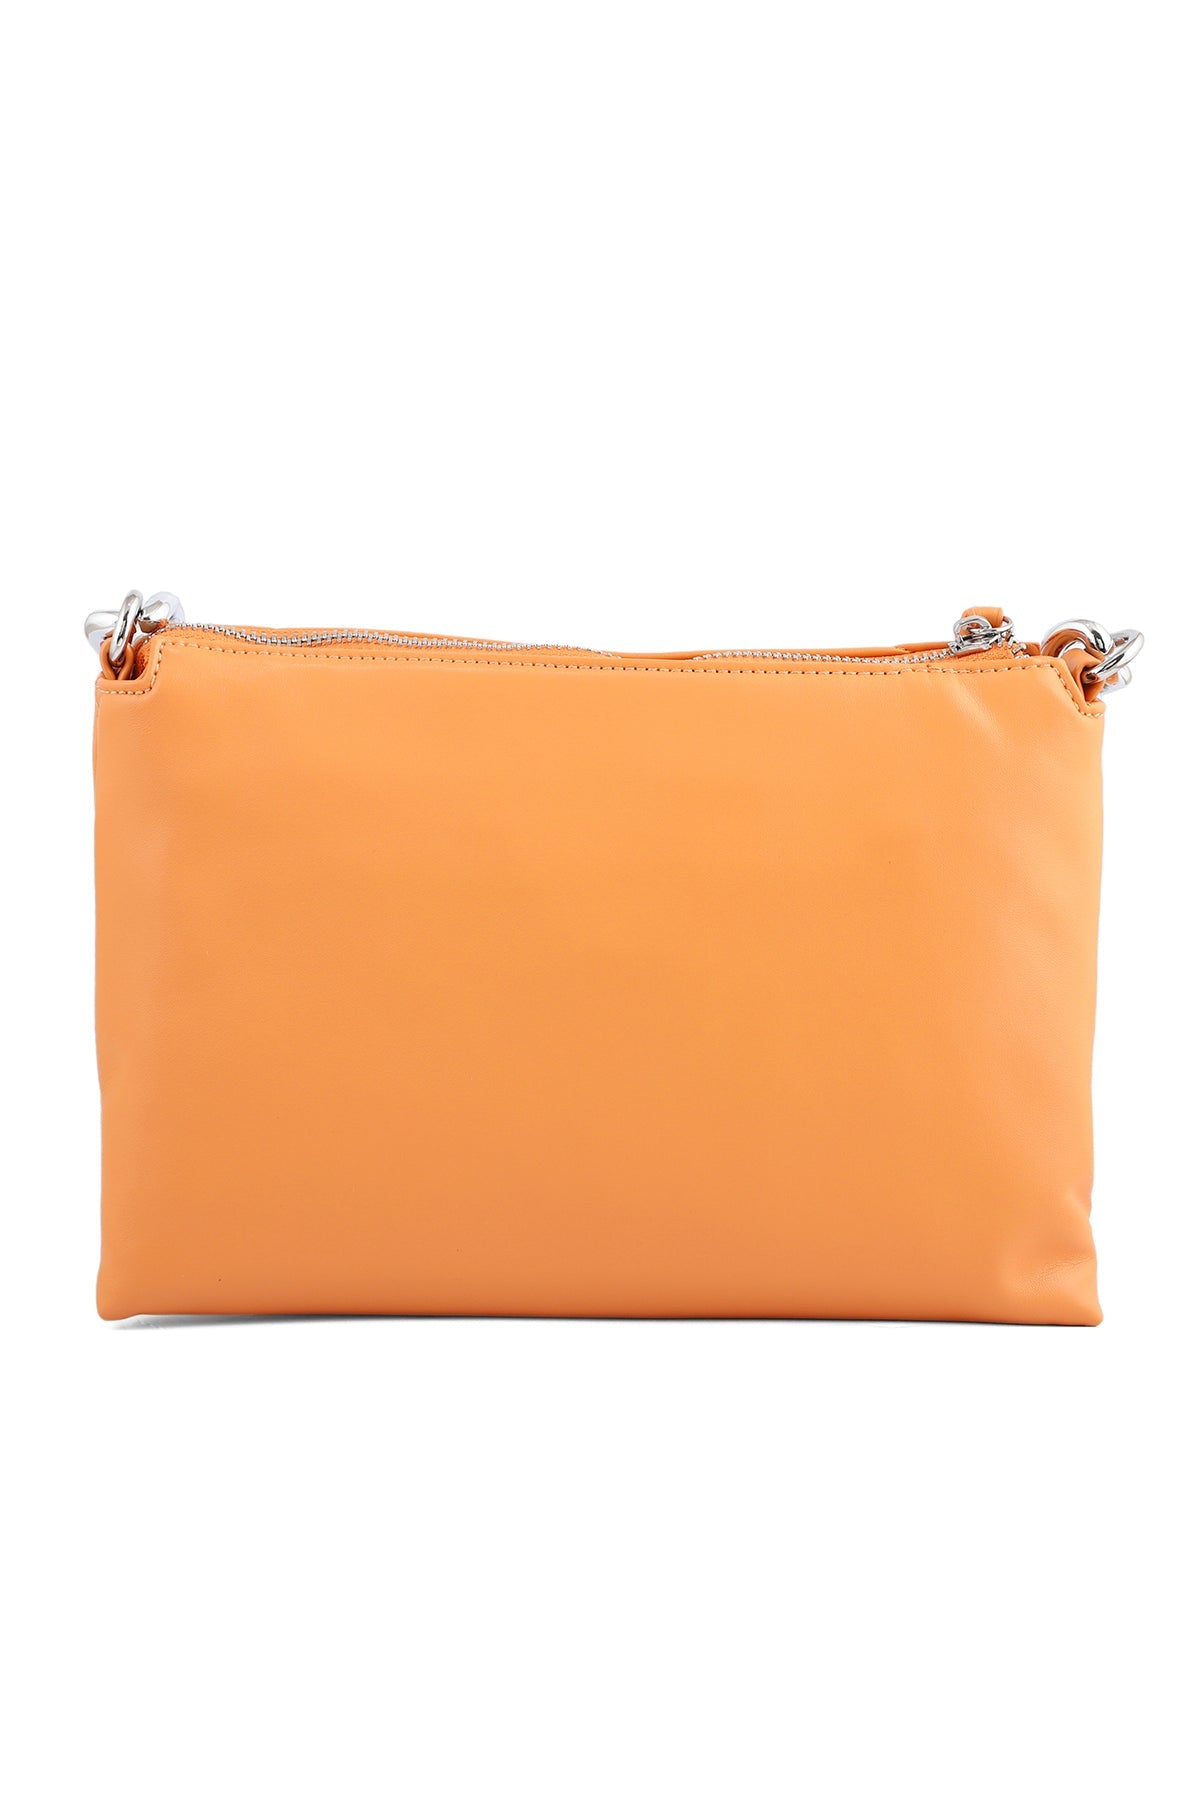 Cross Shoulder Bags B15027-Orange